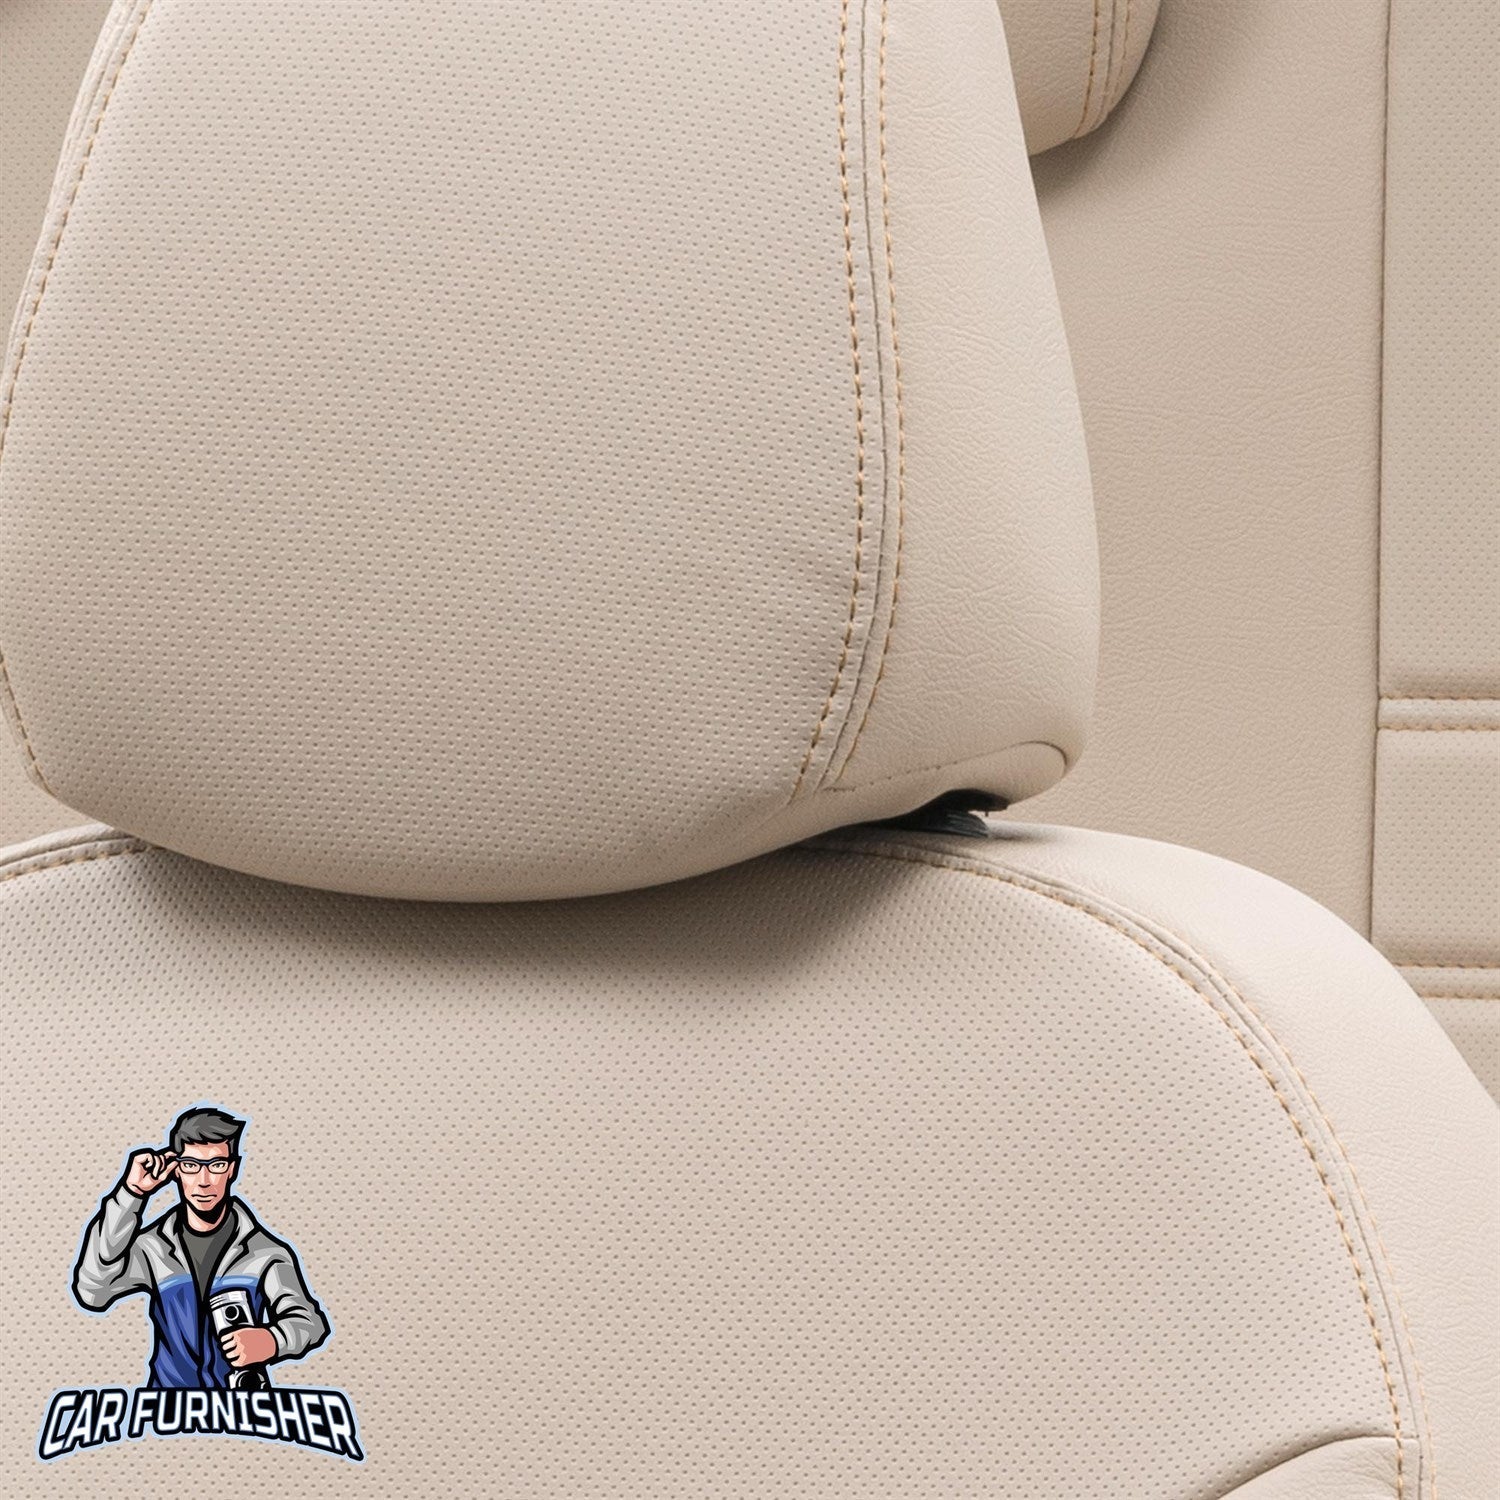 Suzuki Swift Seat Covers Istanbul Leather Design Beige Leather